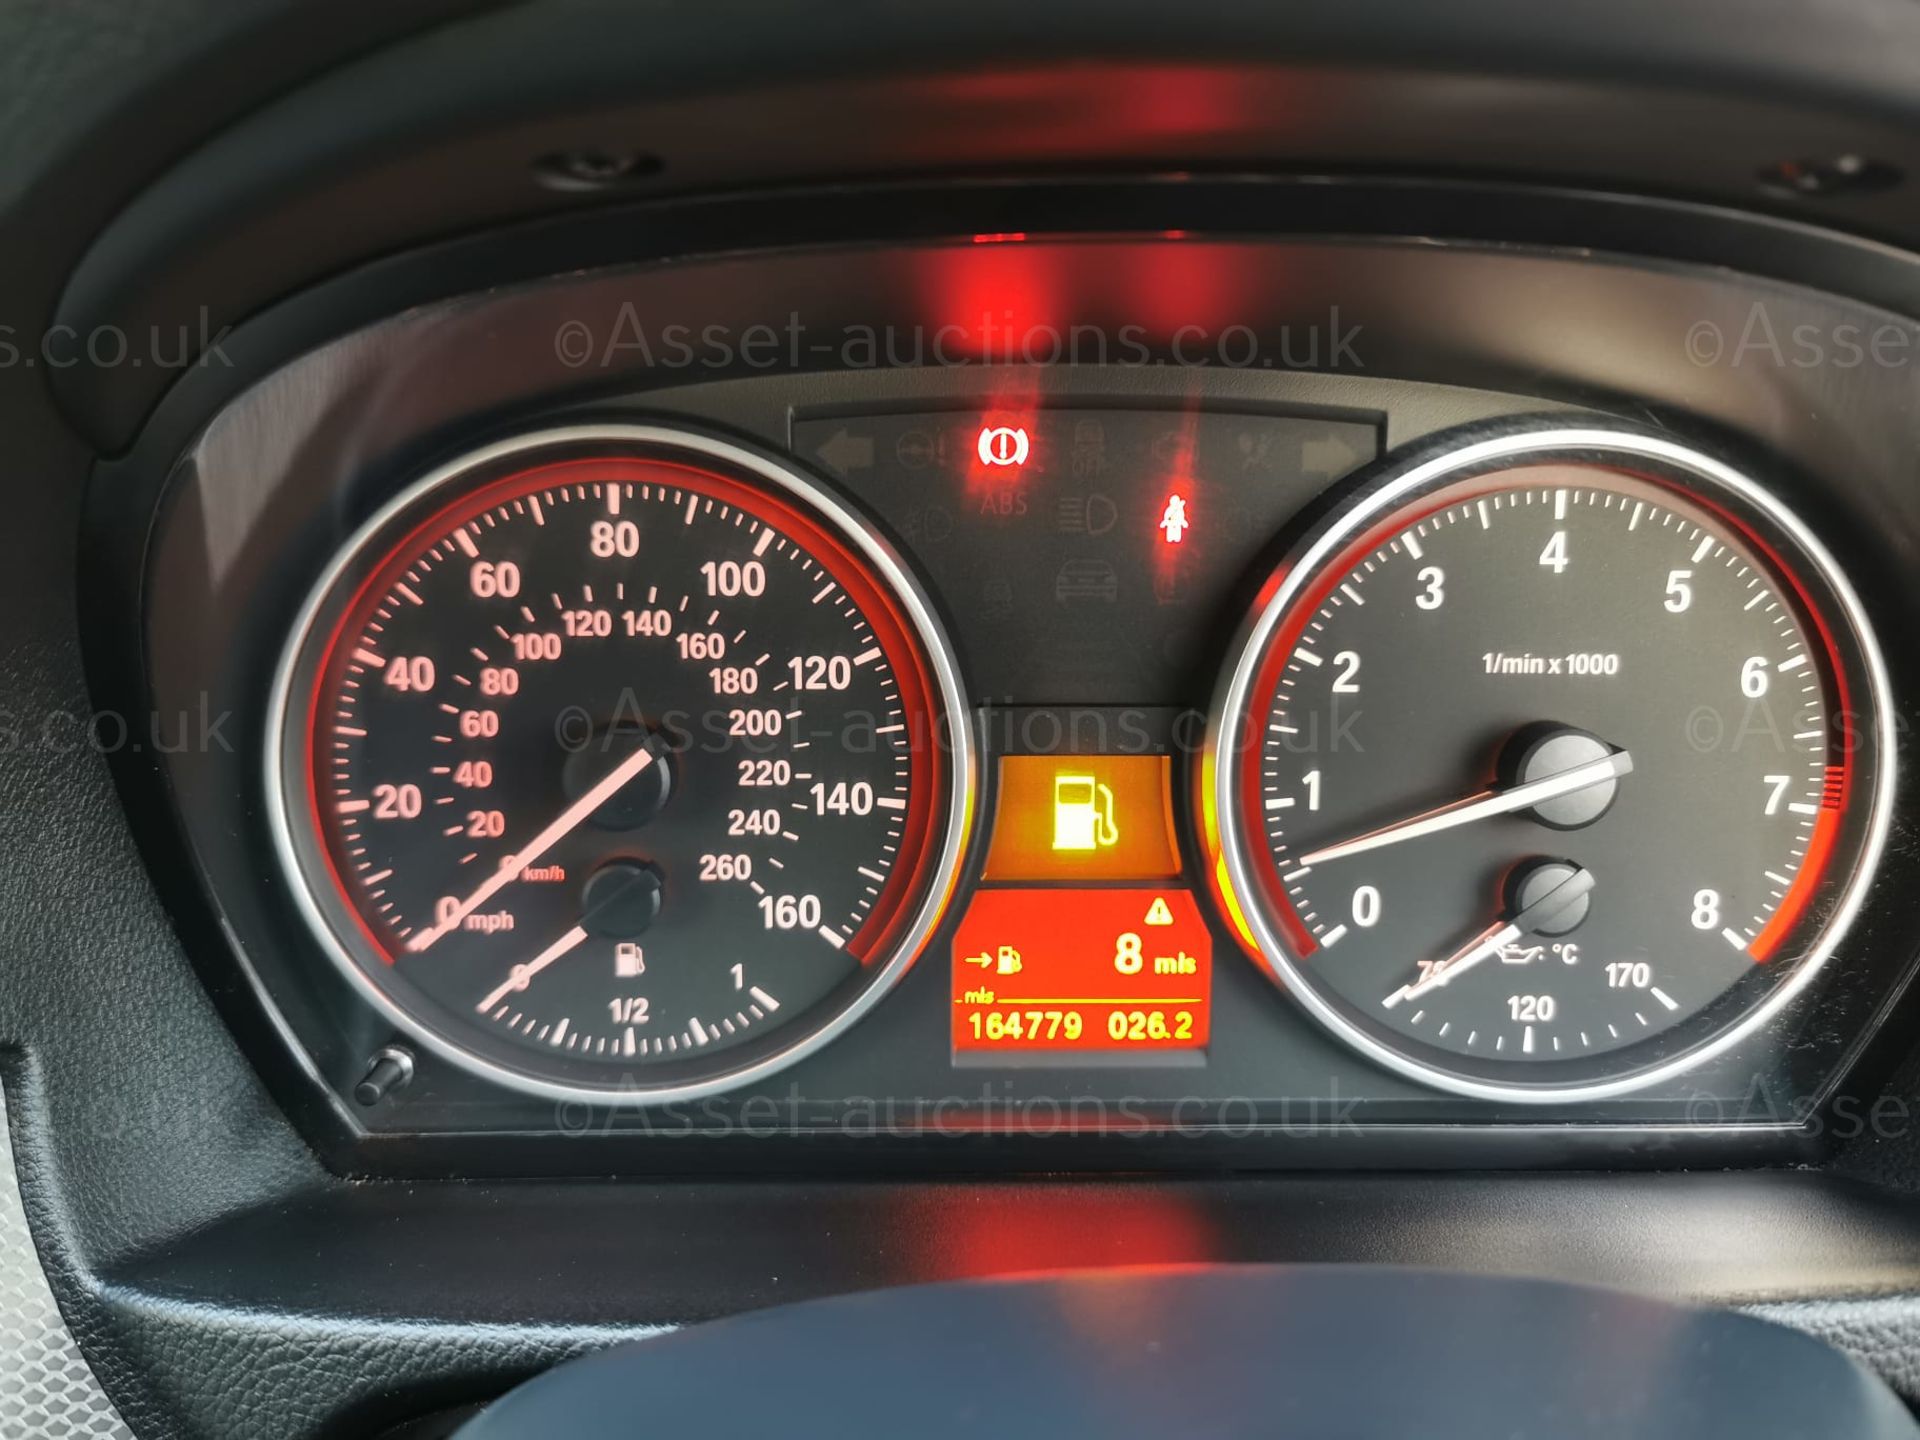 2012 BMW 335I SPORT PLUS EDITION BLACK COUPE, 164,779 MILES, 3.0 PETROL ENGINE *NO VAT* - Image 26 of 29